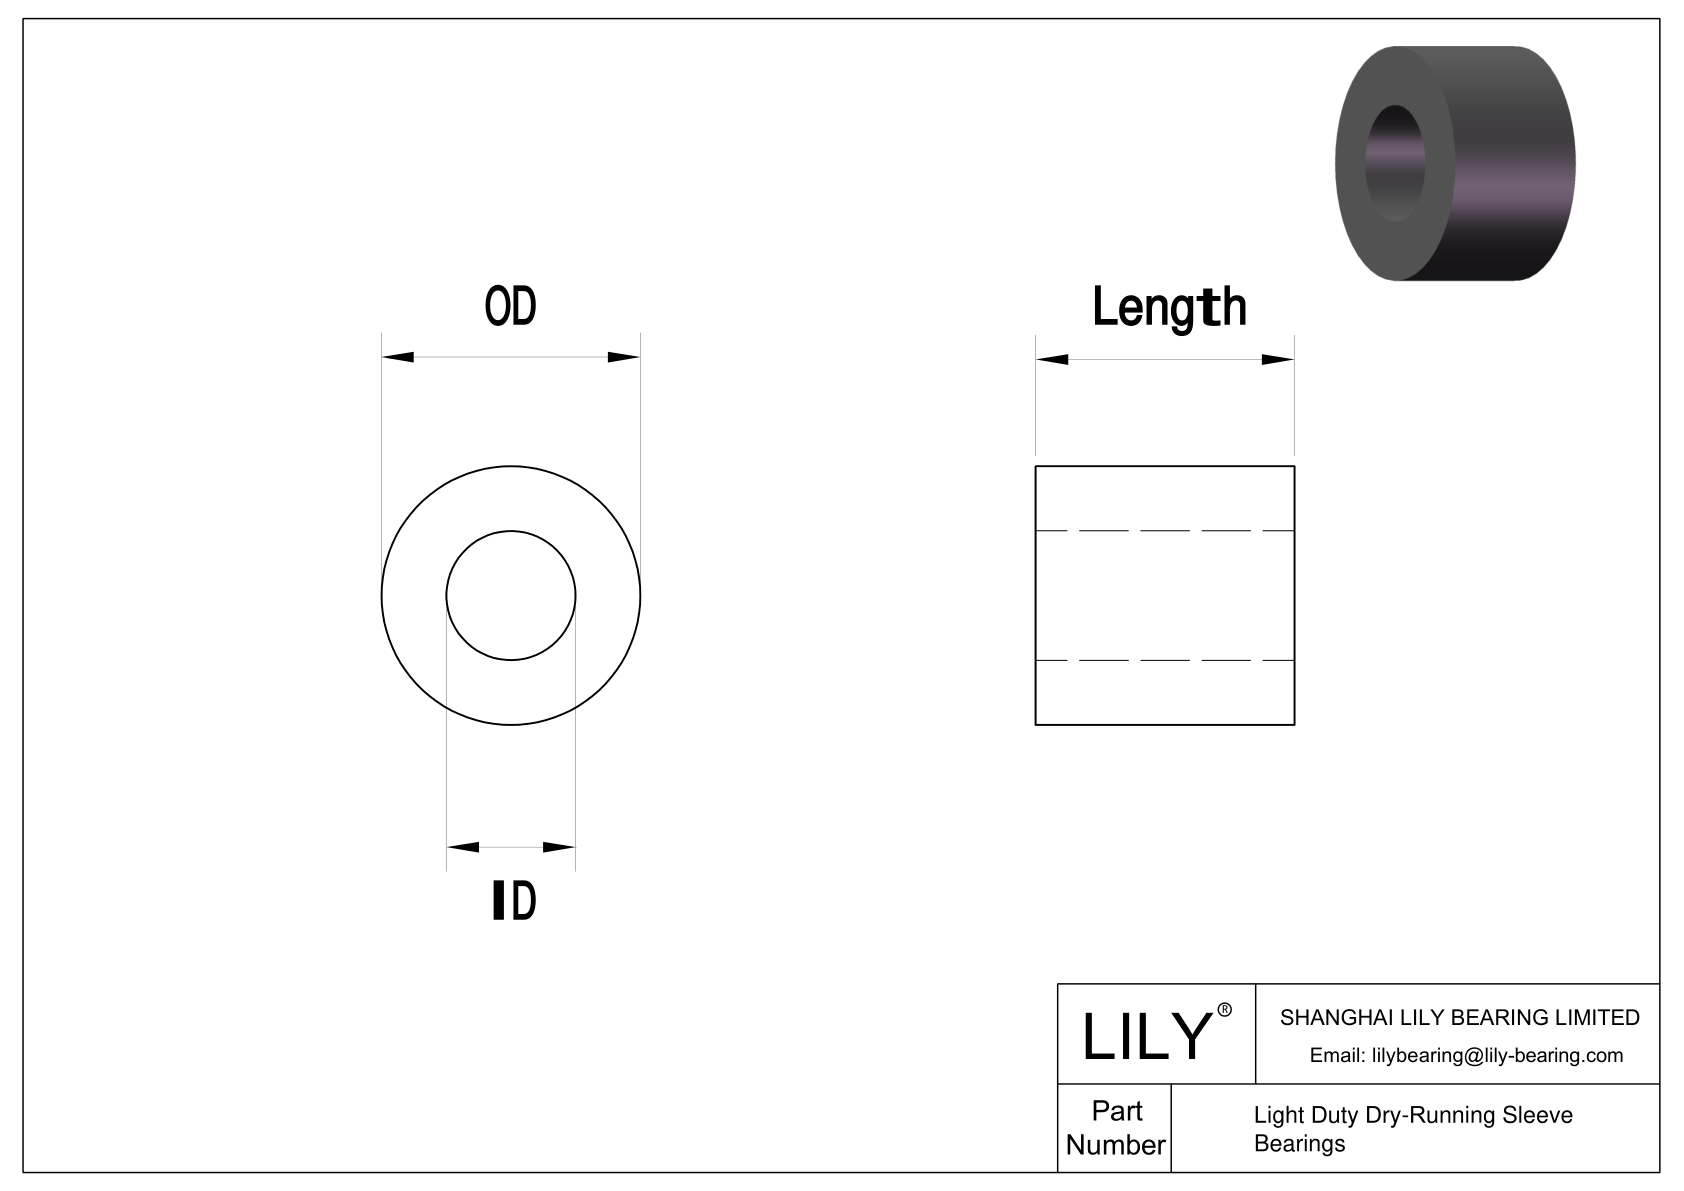 6389K838 Light Duty Dry-Running Sleeve Bearings cad drawing